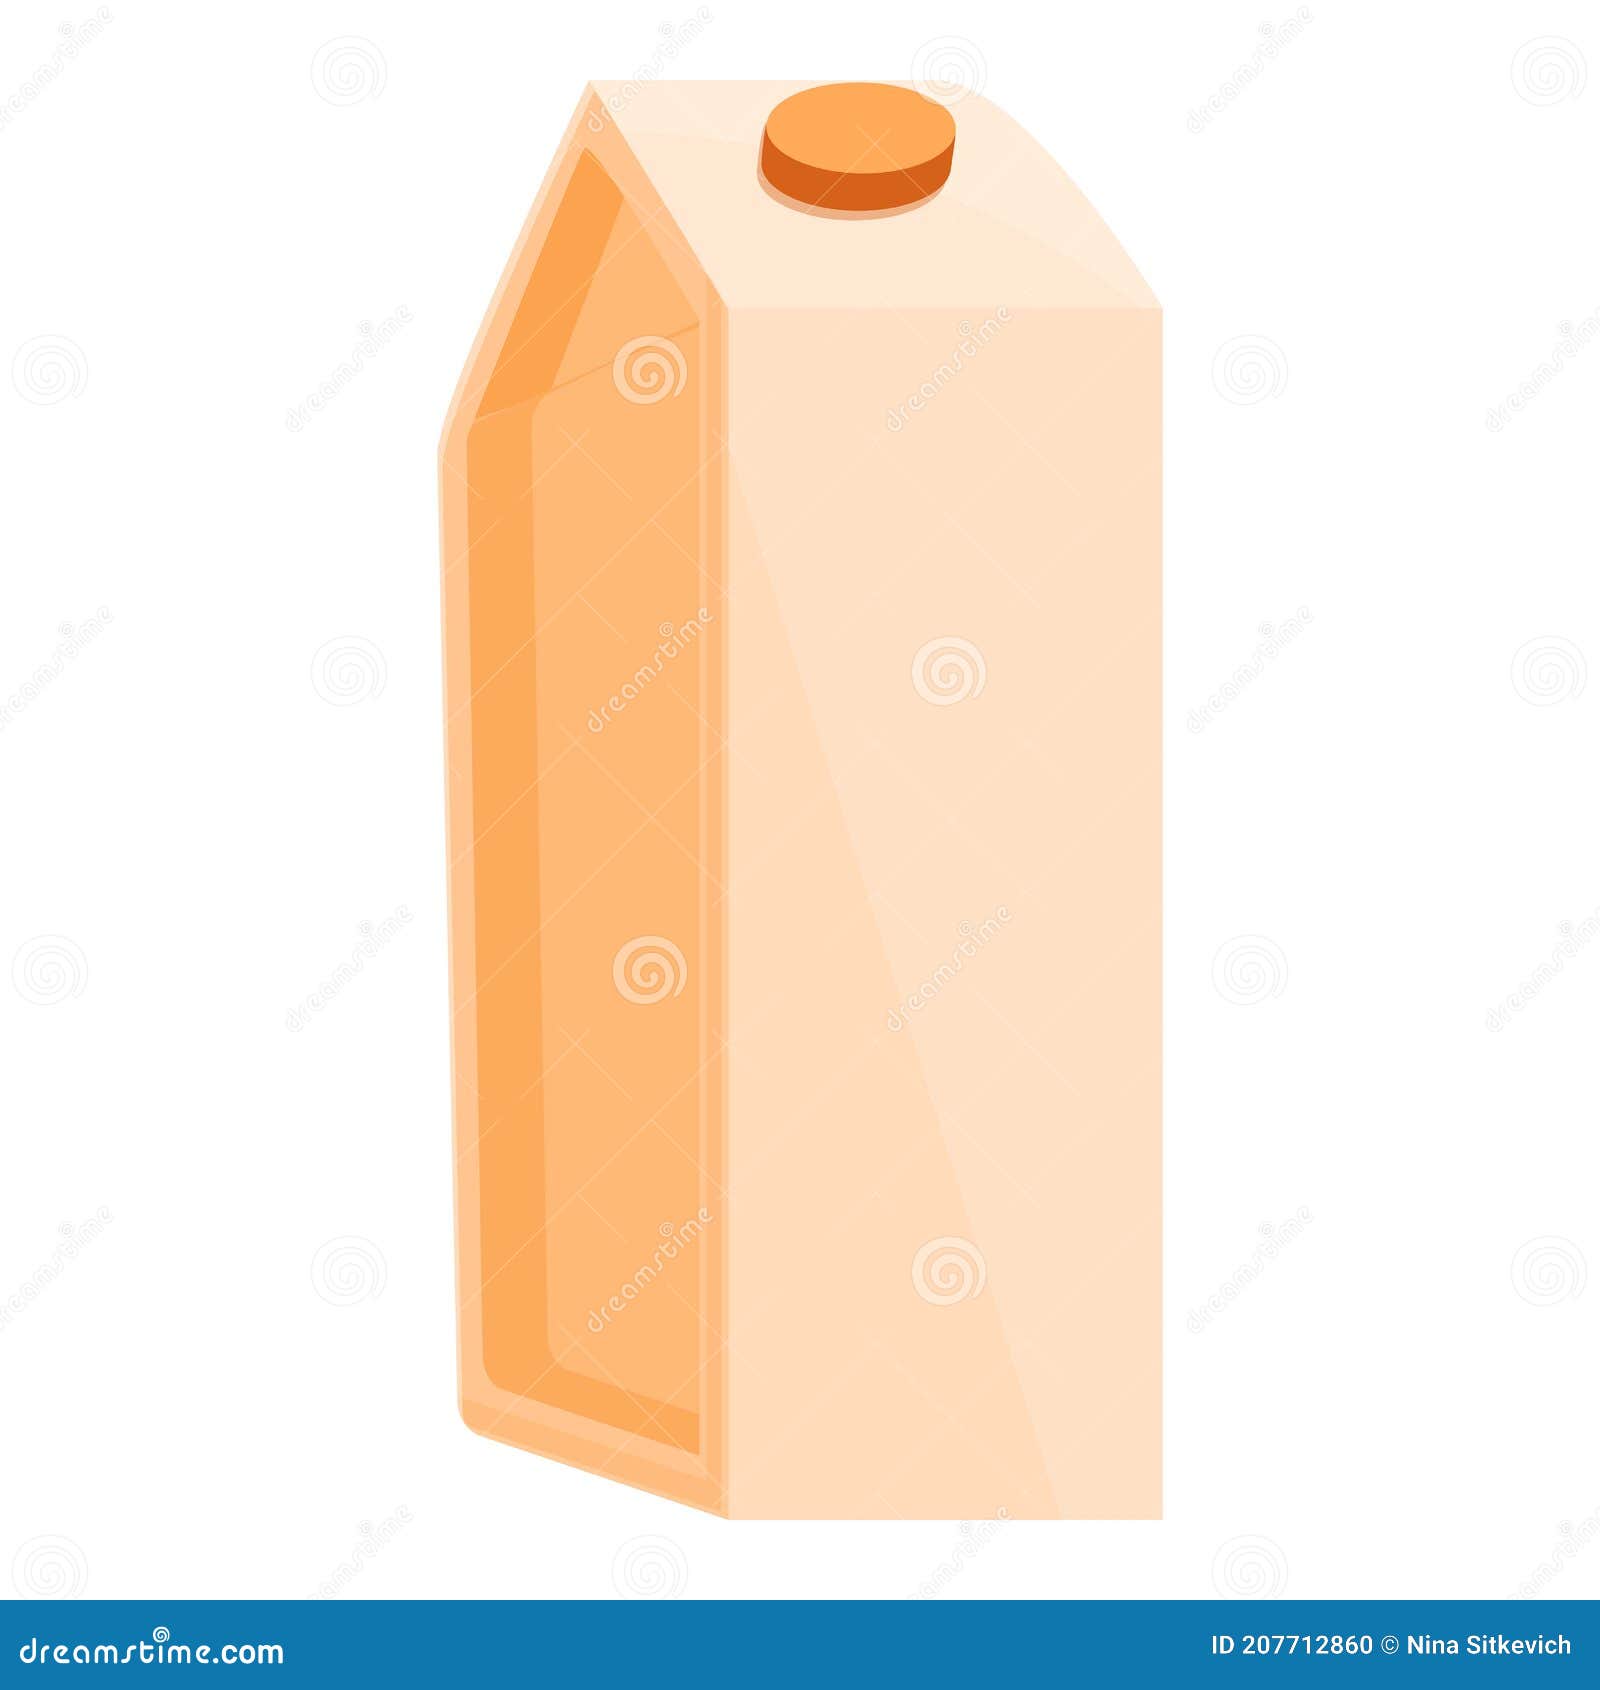 Tetra Pack Icon, Cartoon Style Stock Illustration - Illustration of paper,  template: 207712860